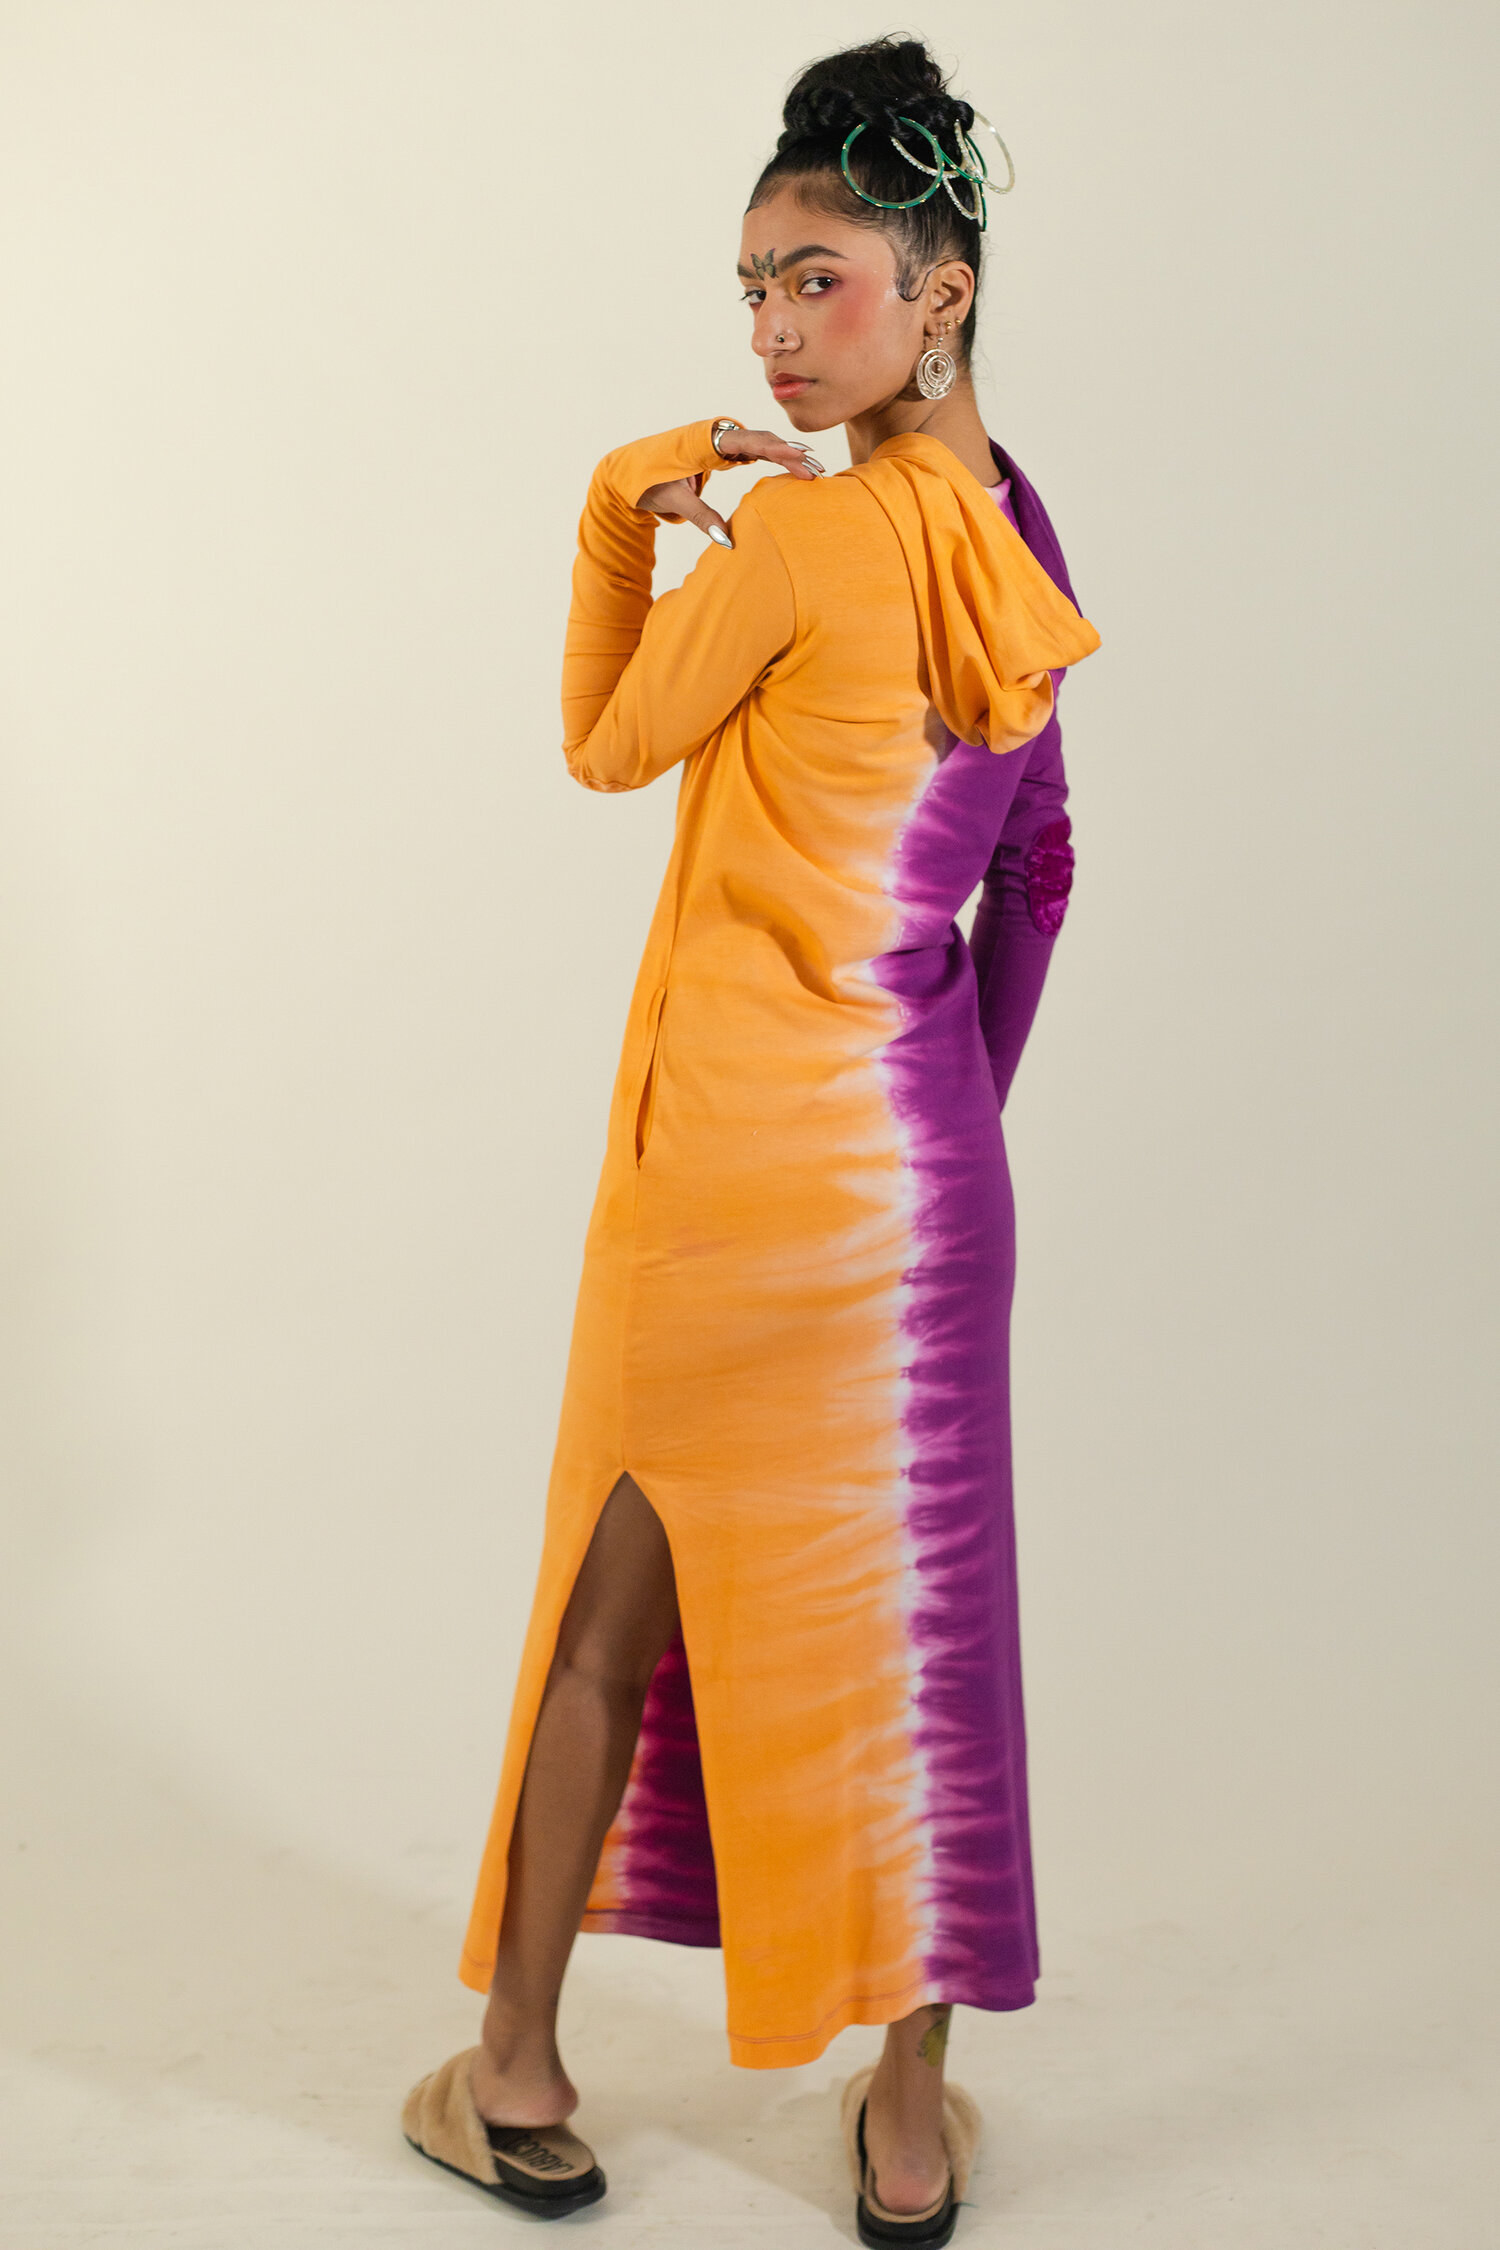 the orange and purple dress